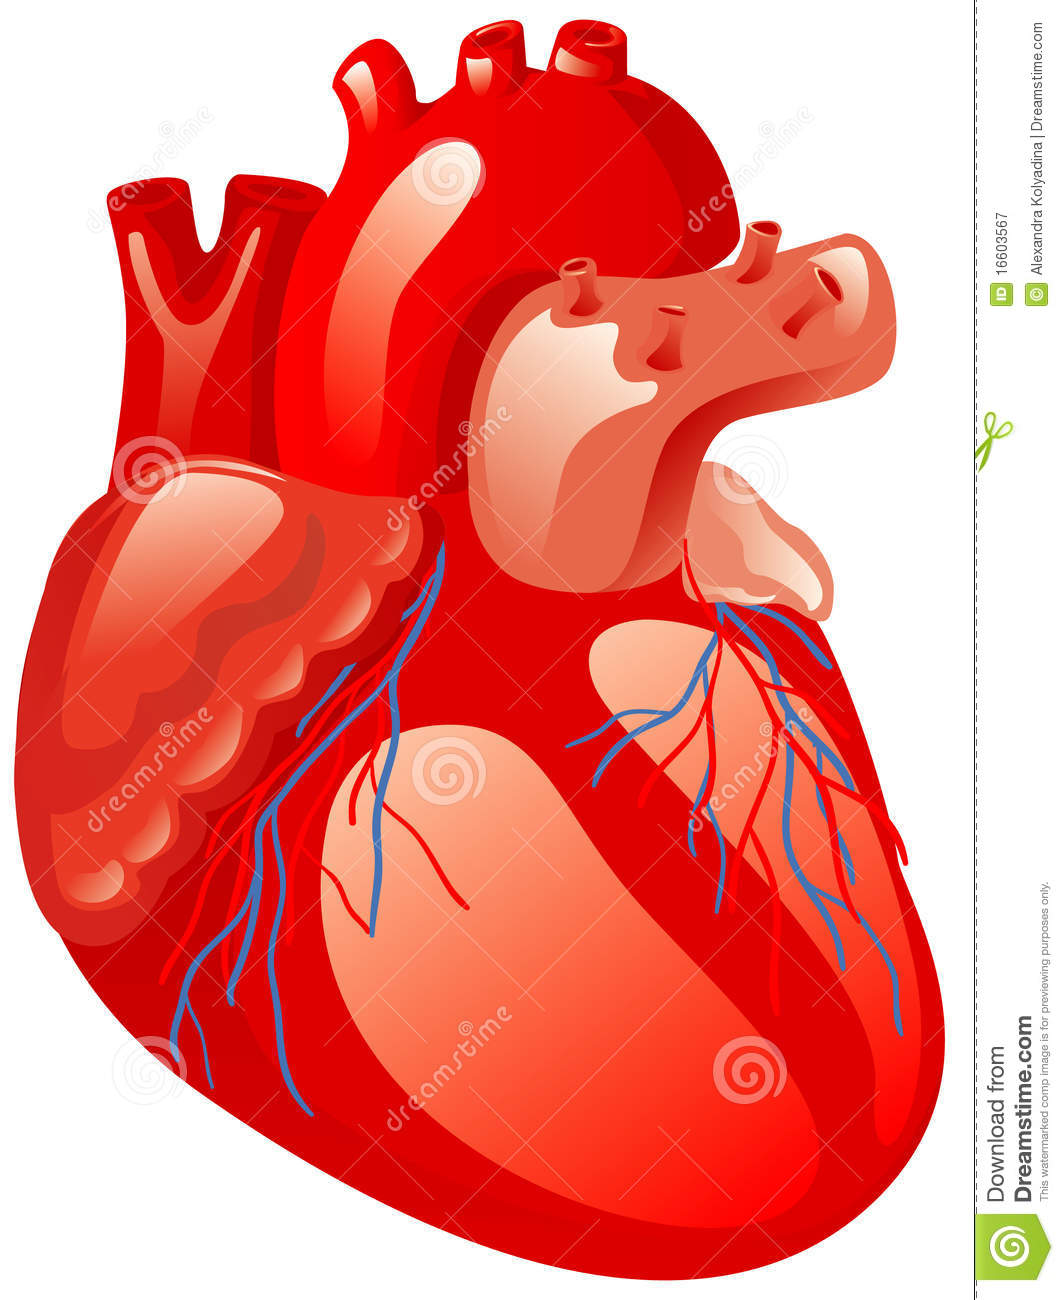 Human Heart Royalty Free Stock Photography Image 16603567